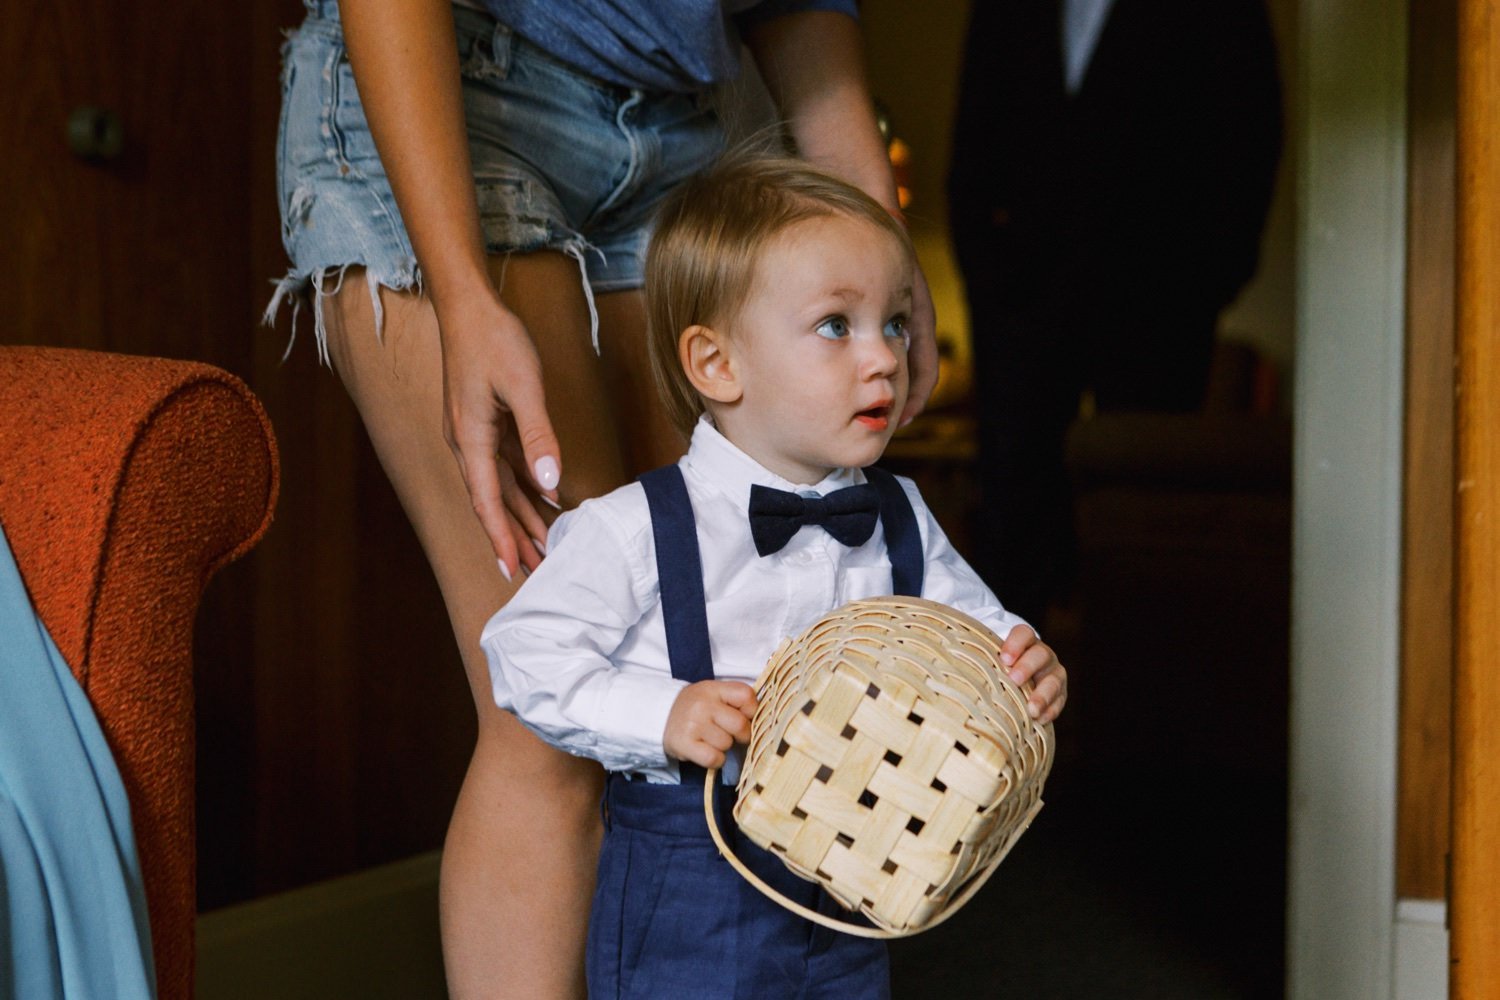  toddler in suspenders and bowtie carries wicker basket 